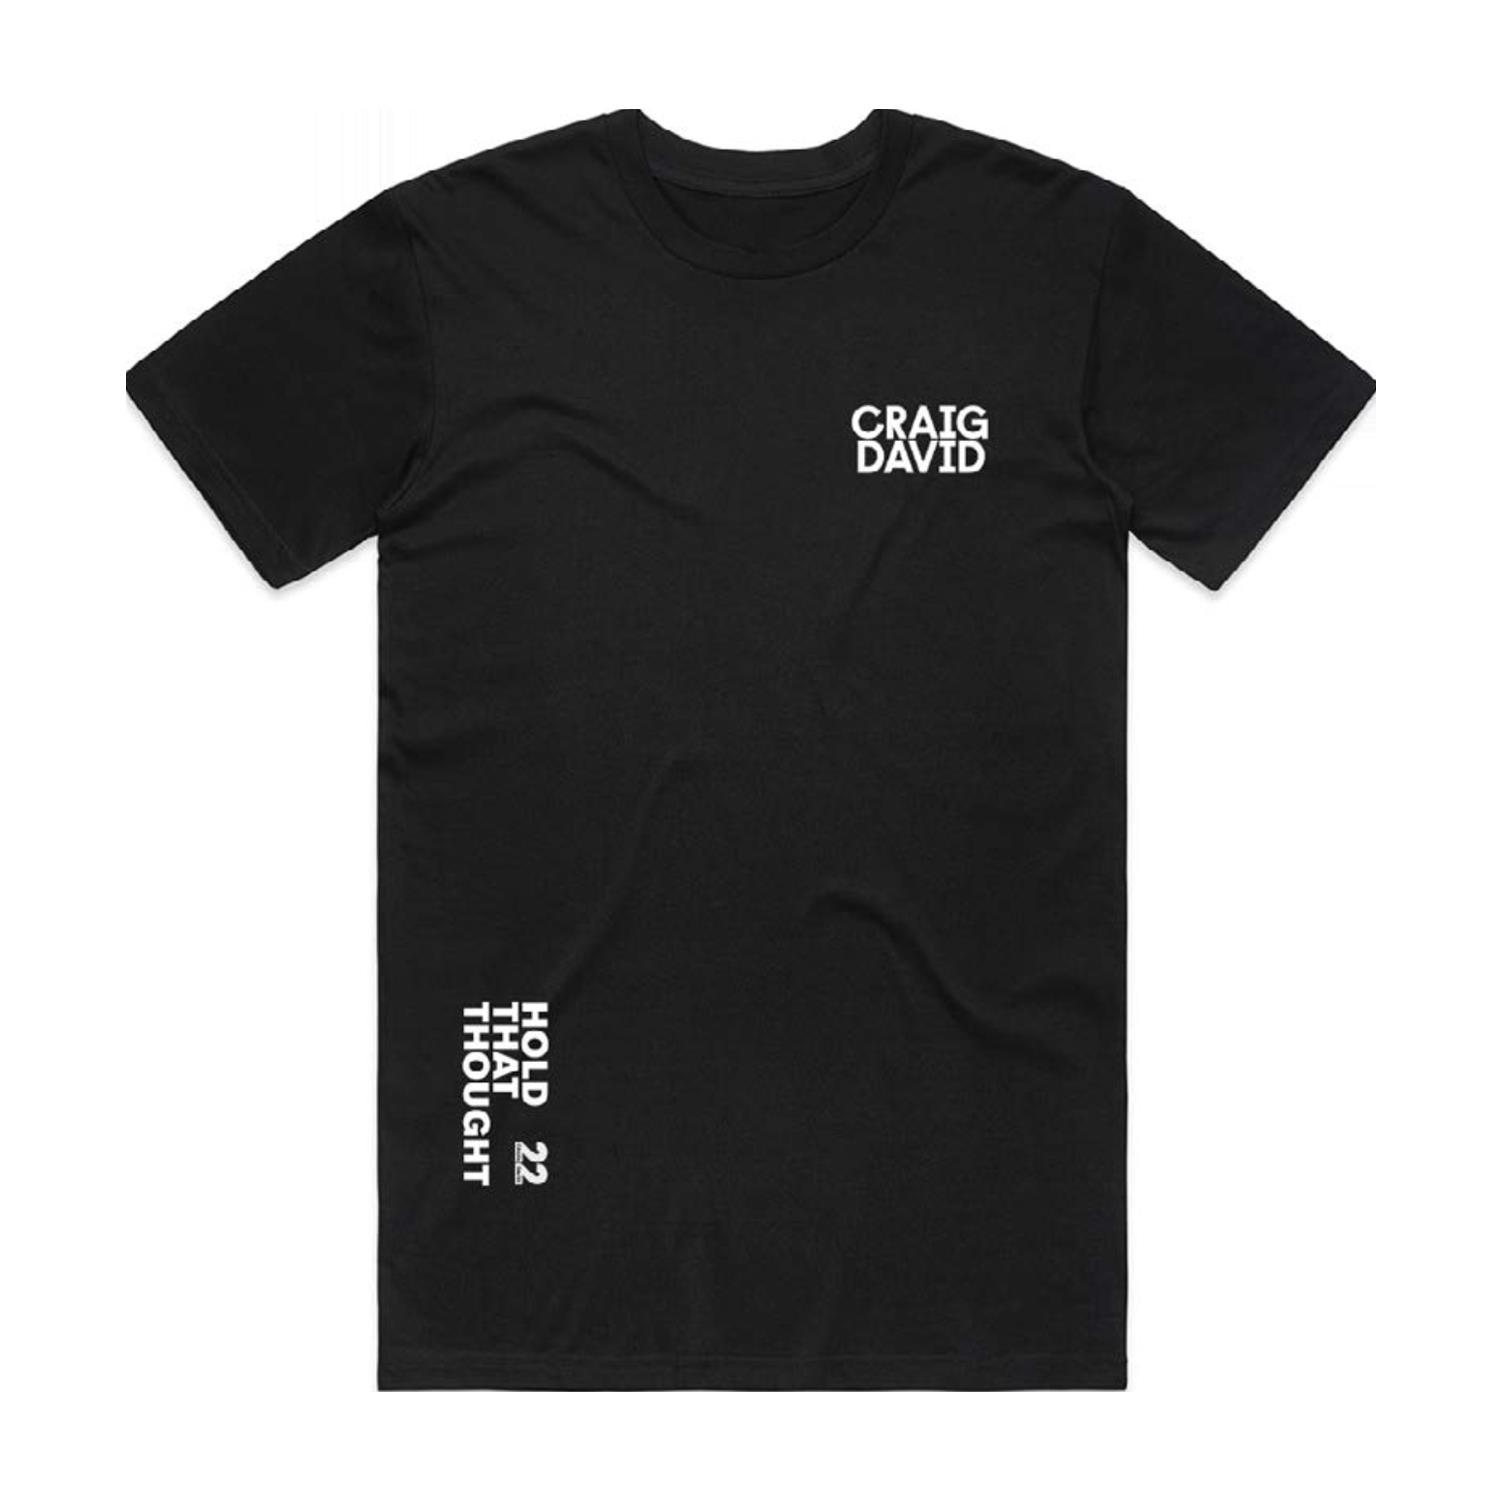 Craig David - Hold That Thought Tour 2022 Black T-Shirt